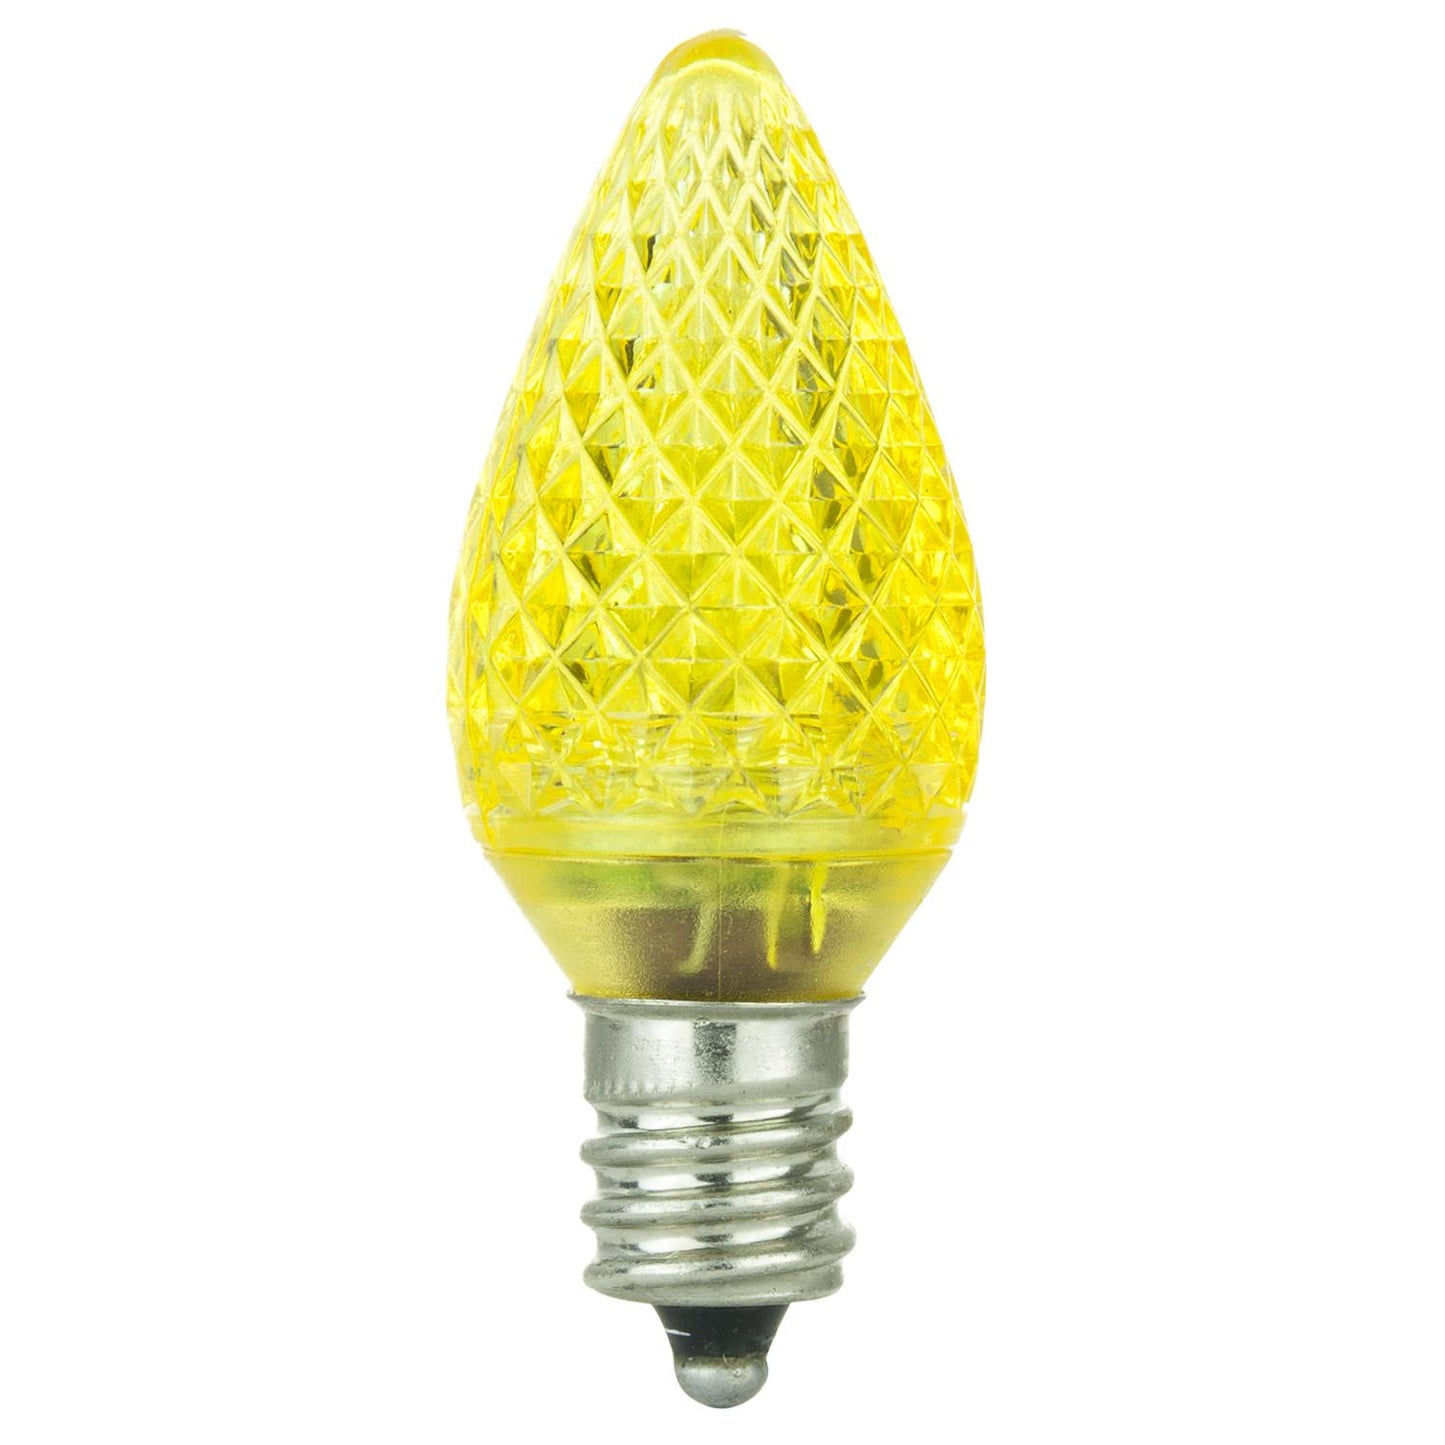 Sunlite LED C7 0.4W Yellow Colored Night Light Bulbs Candelabra (E12)Base